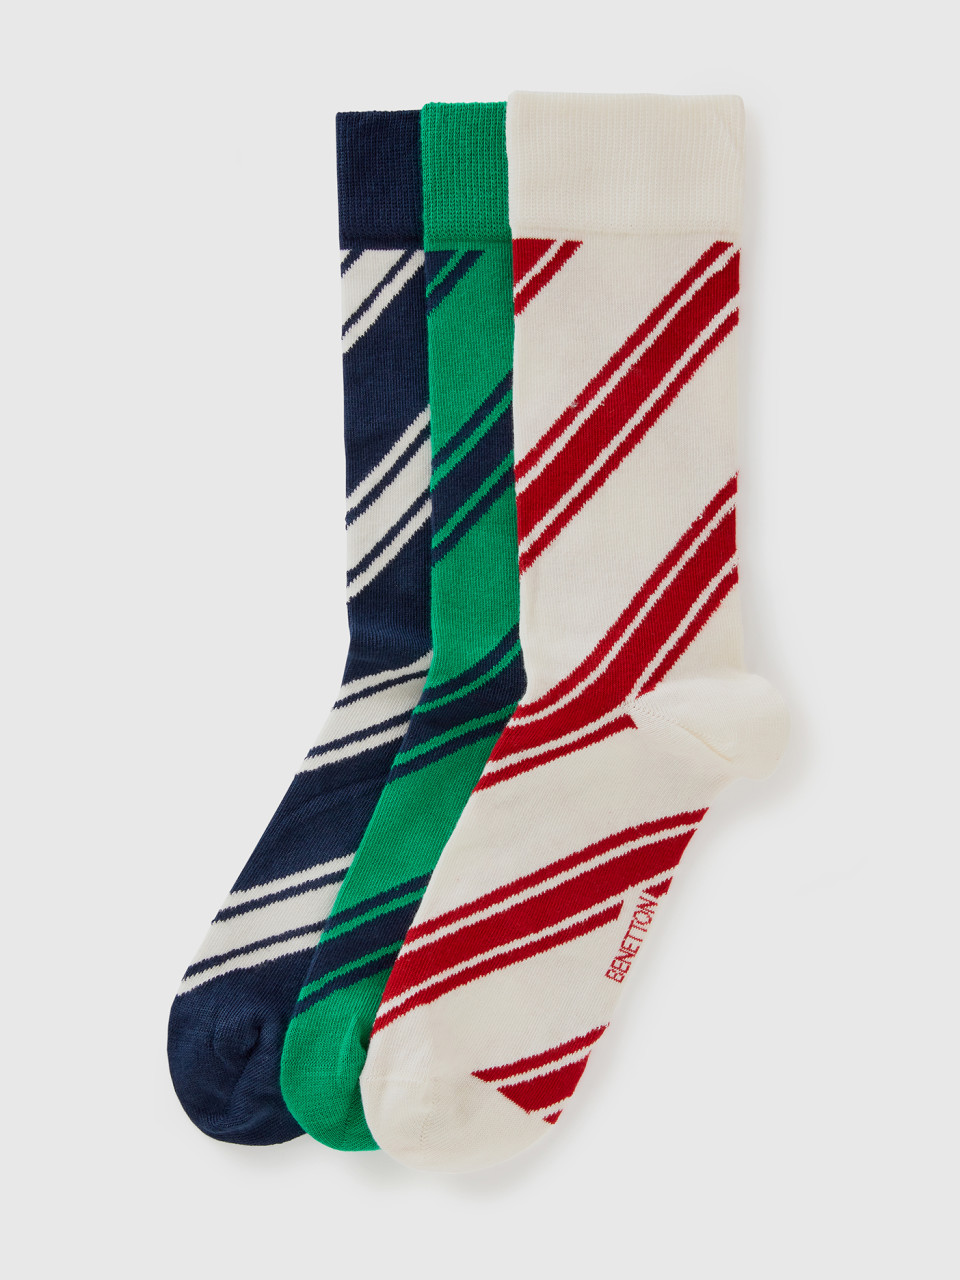 Benetton, Long Socks With Regimental Stripes, Multi-color, Men